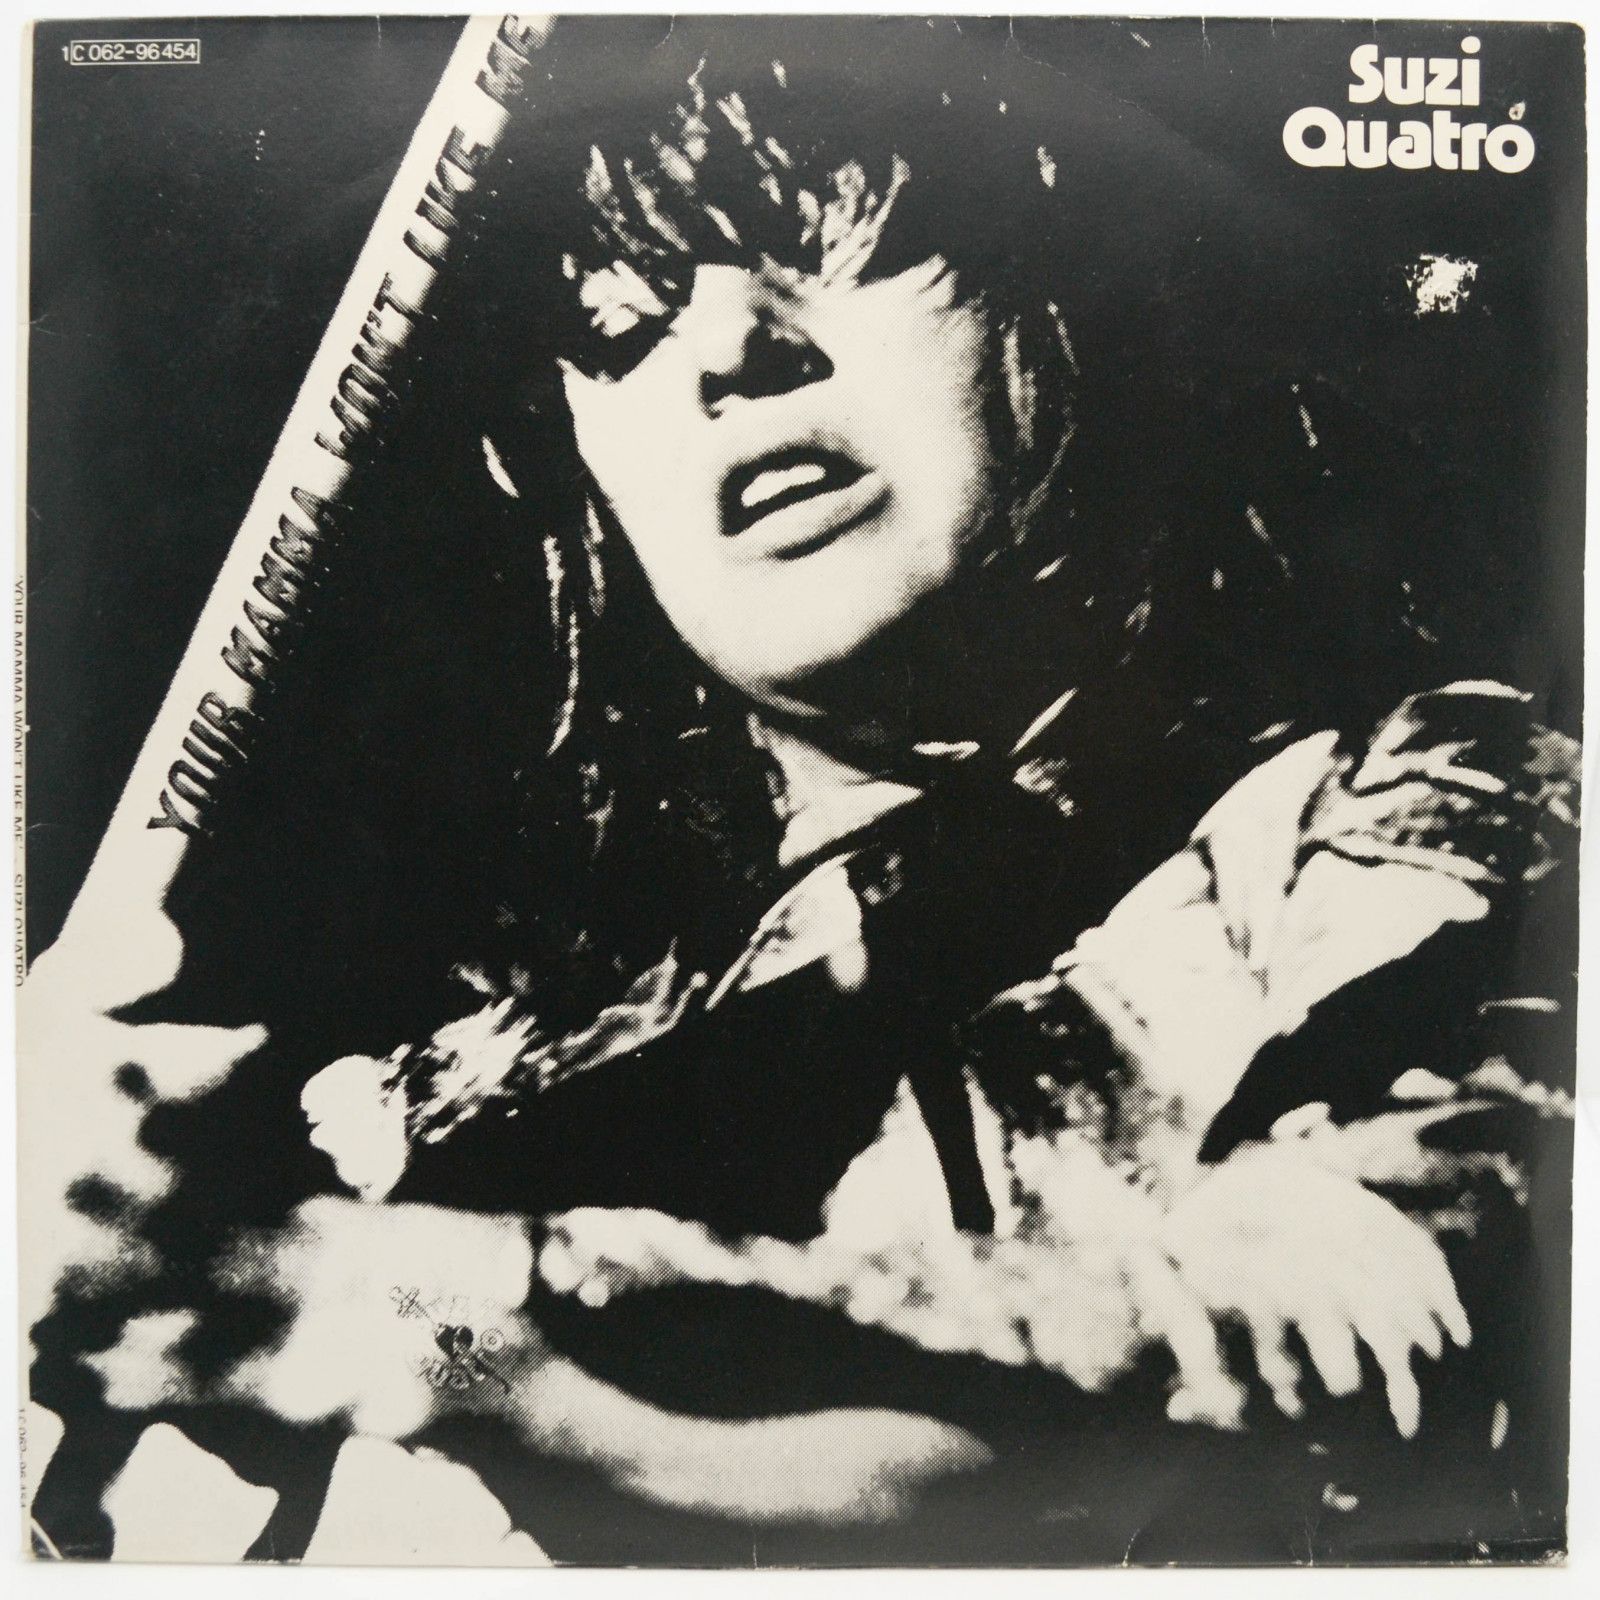 Suzi Quatro — Your Mamma Won't Like Me, 1975